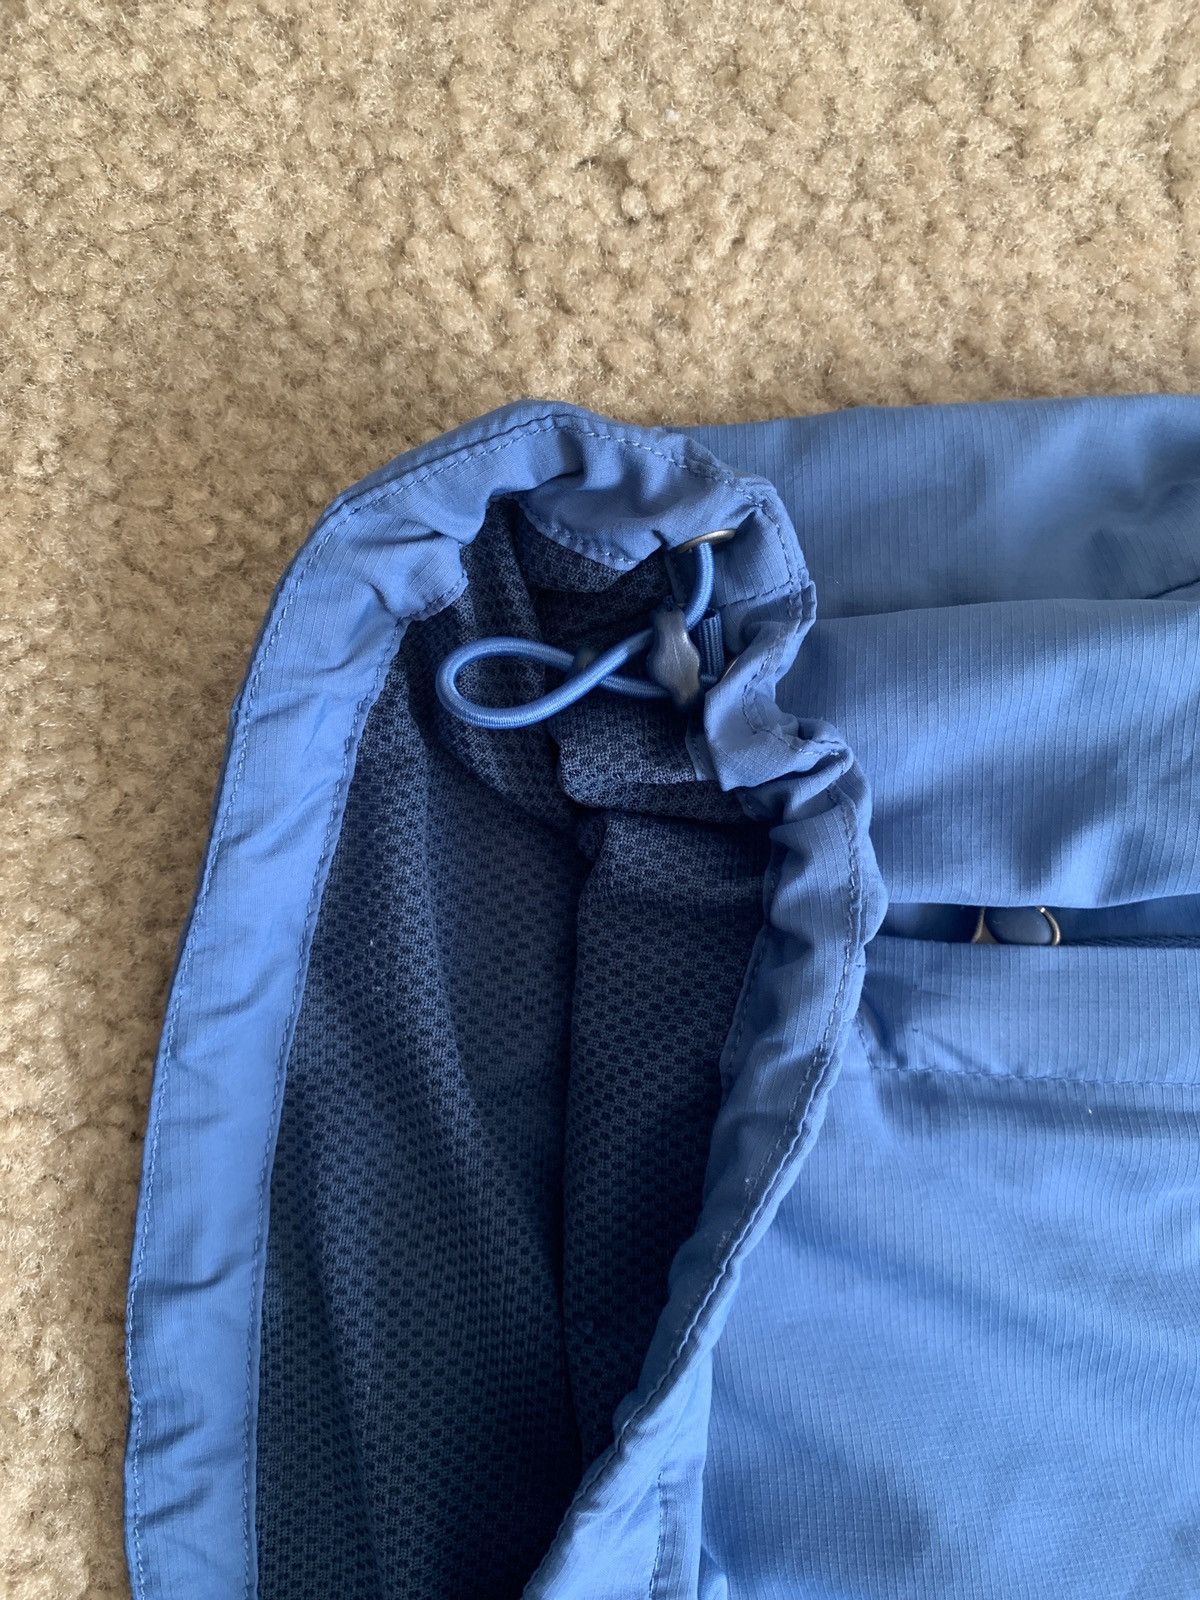 Rei Rei Raincoat Jacket (Blue) Size US S / EU 44-46 / 1 - 4 Thumbnail